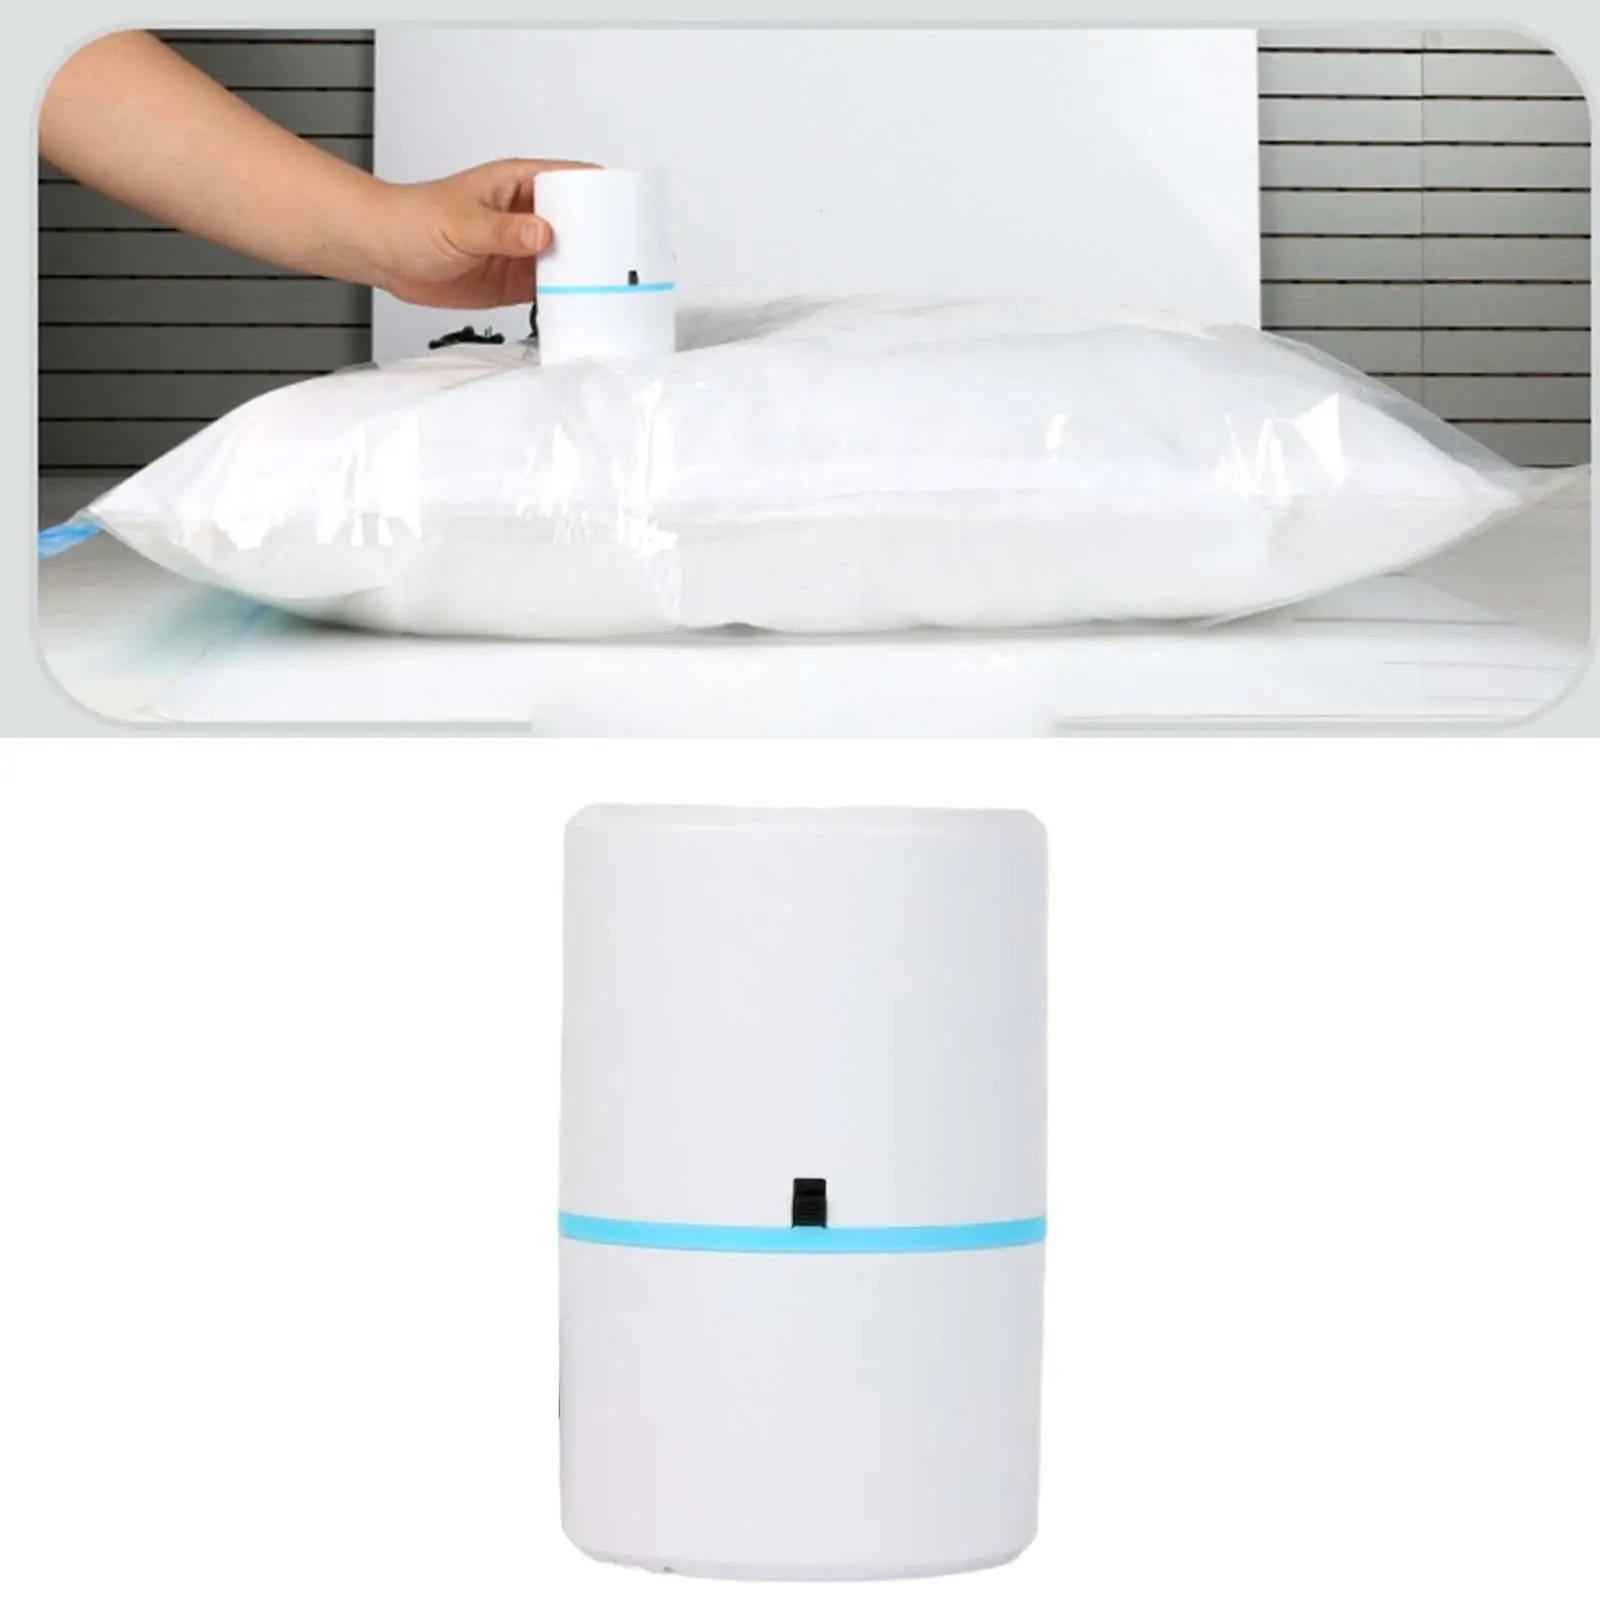  Pump Portable Air Output 400L/Min Durable Pump Inflator for Inflatable Cushions Travel Storage Air Mattress Beds